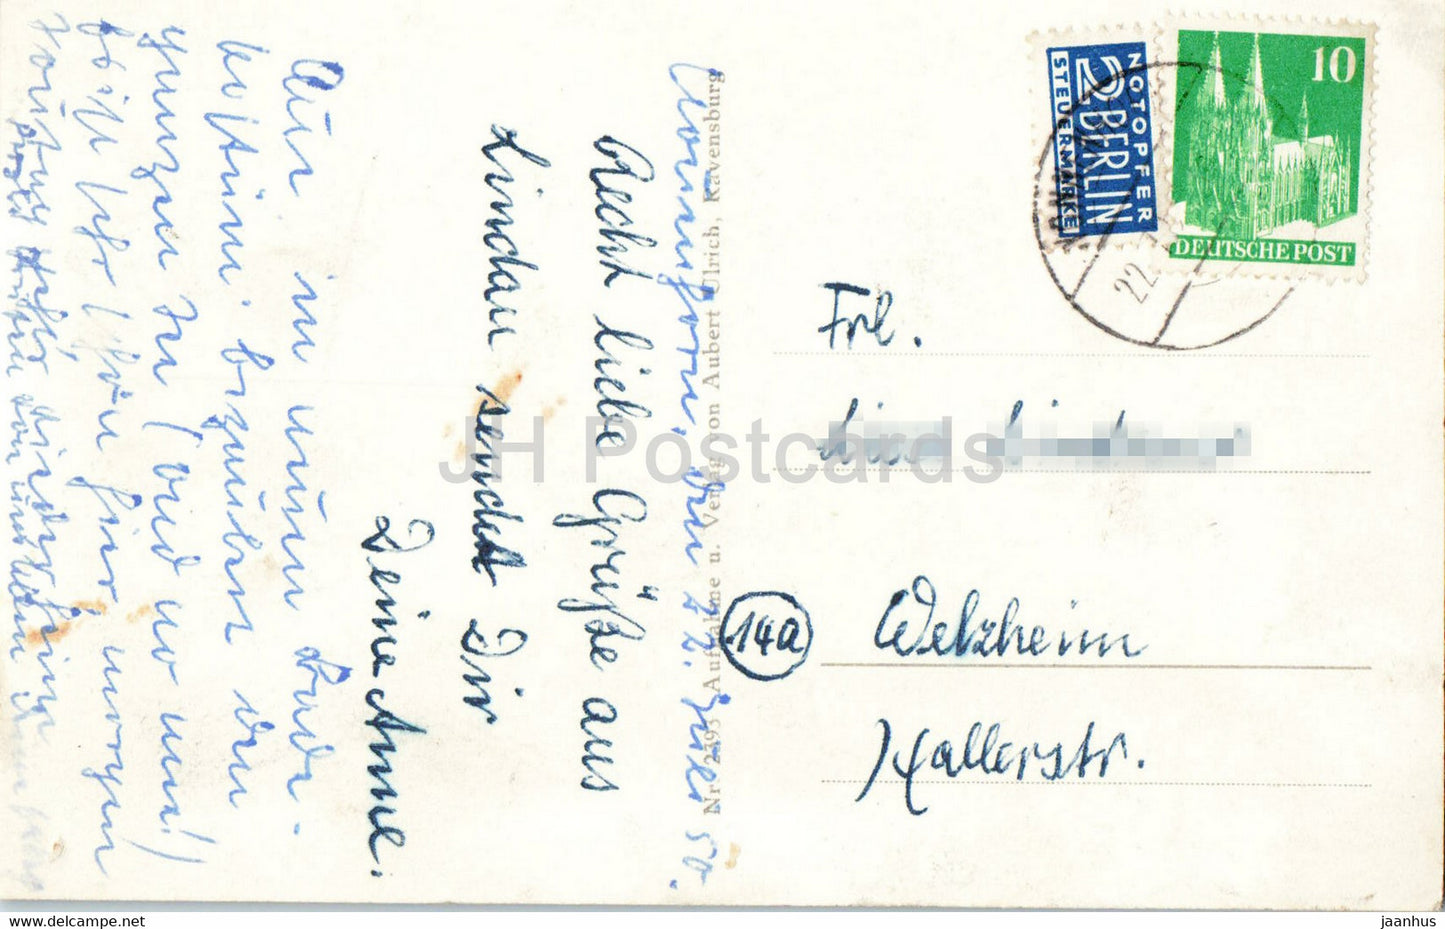 Lindau i Bodensee - Hafendamm - ship - lighthouse - old postcard - 1950 - Germany - used